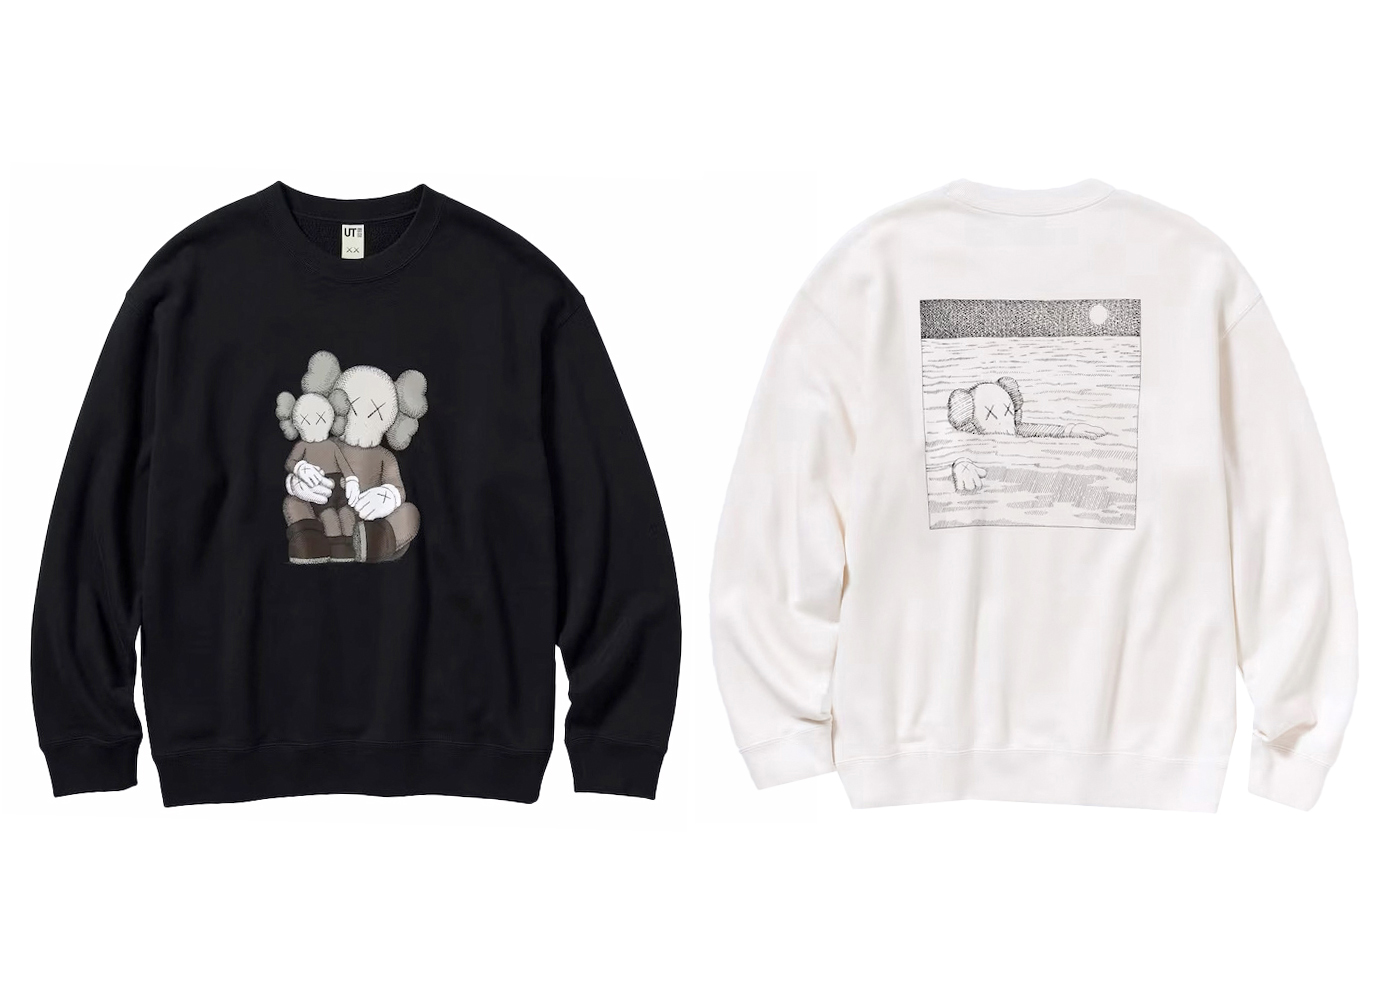 KAWS x Uniqlo Longsleeve Sweatshirt (Set of 2) Off White/Black